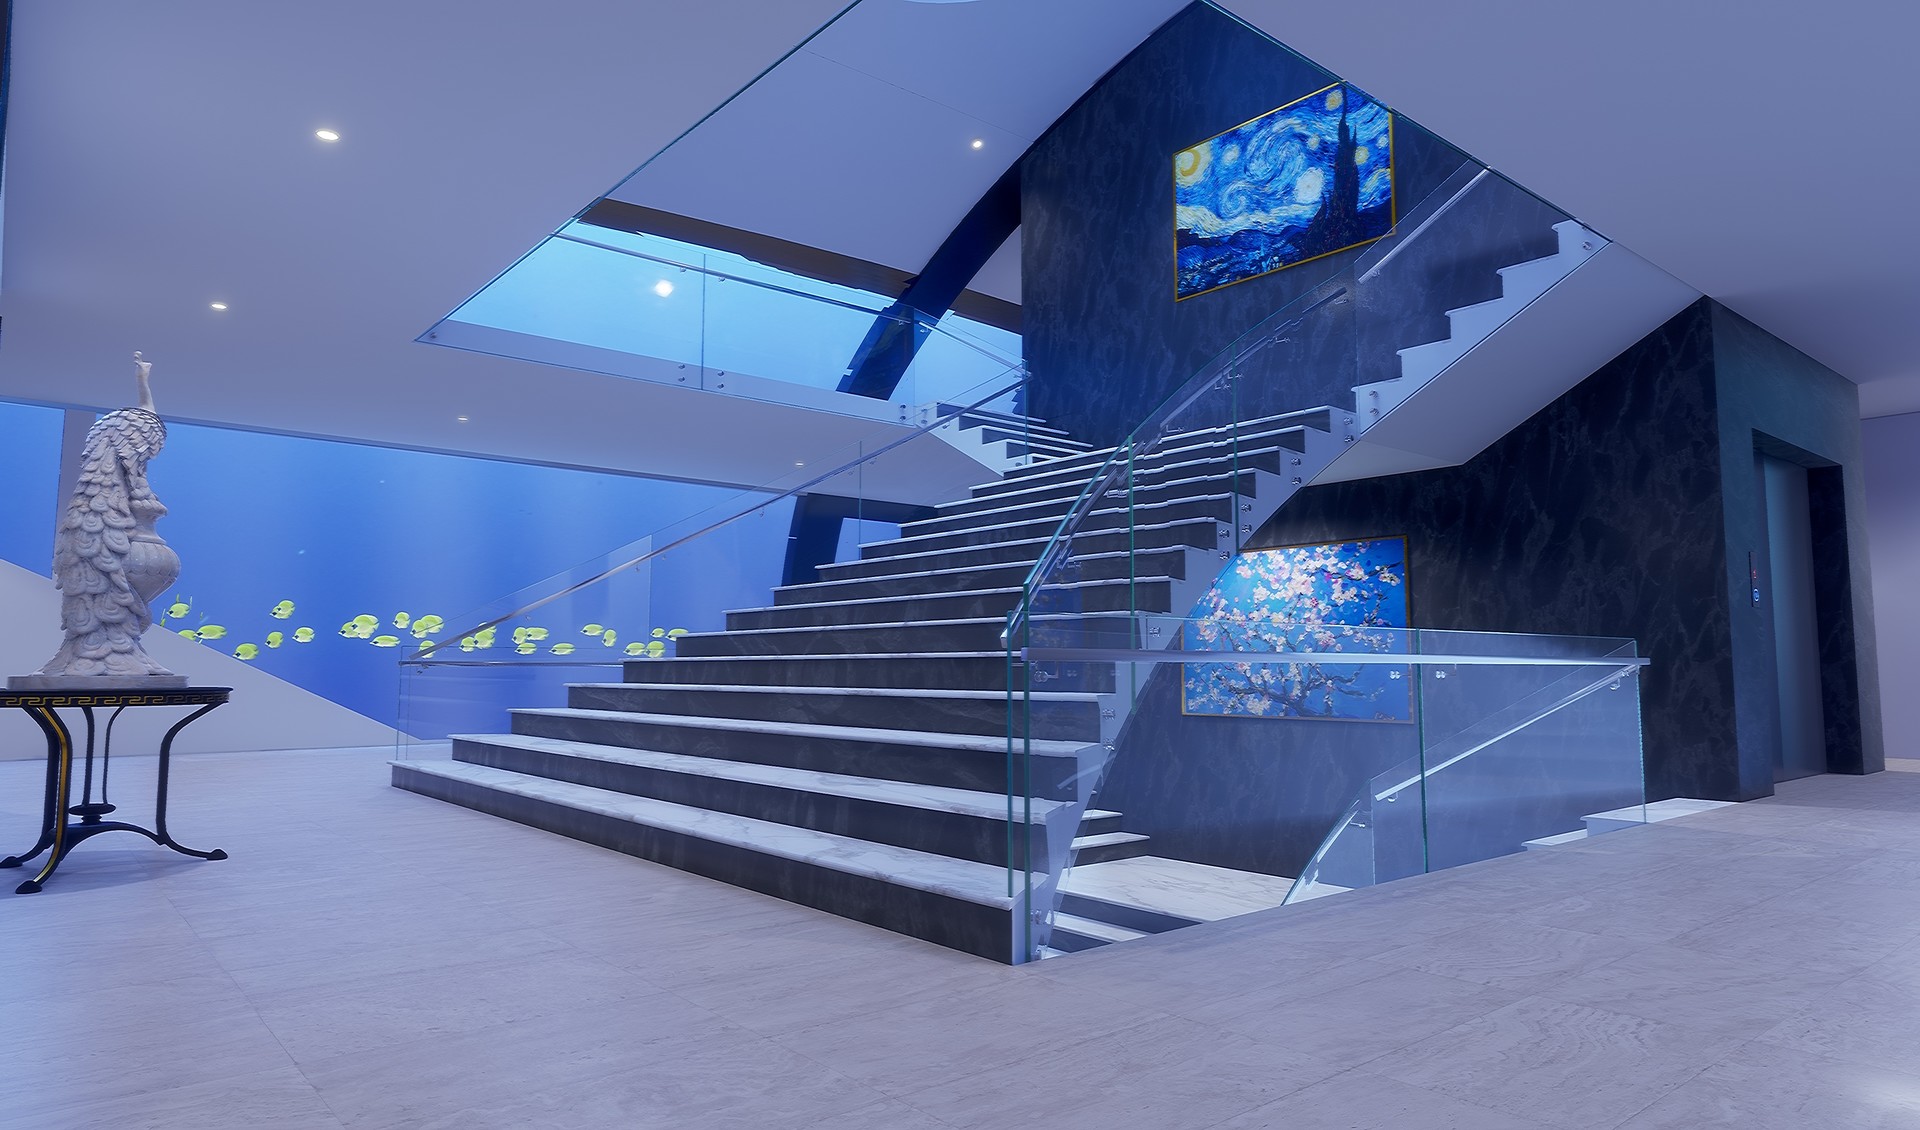 Orhan YILMAZ - Submarine Hotel Design (Unreal Engine 4 / UE4)